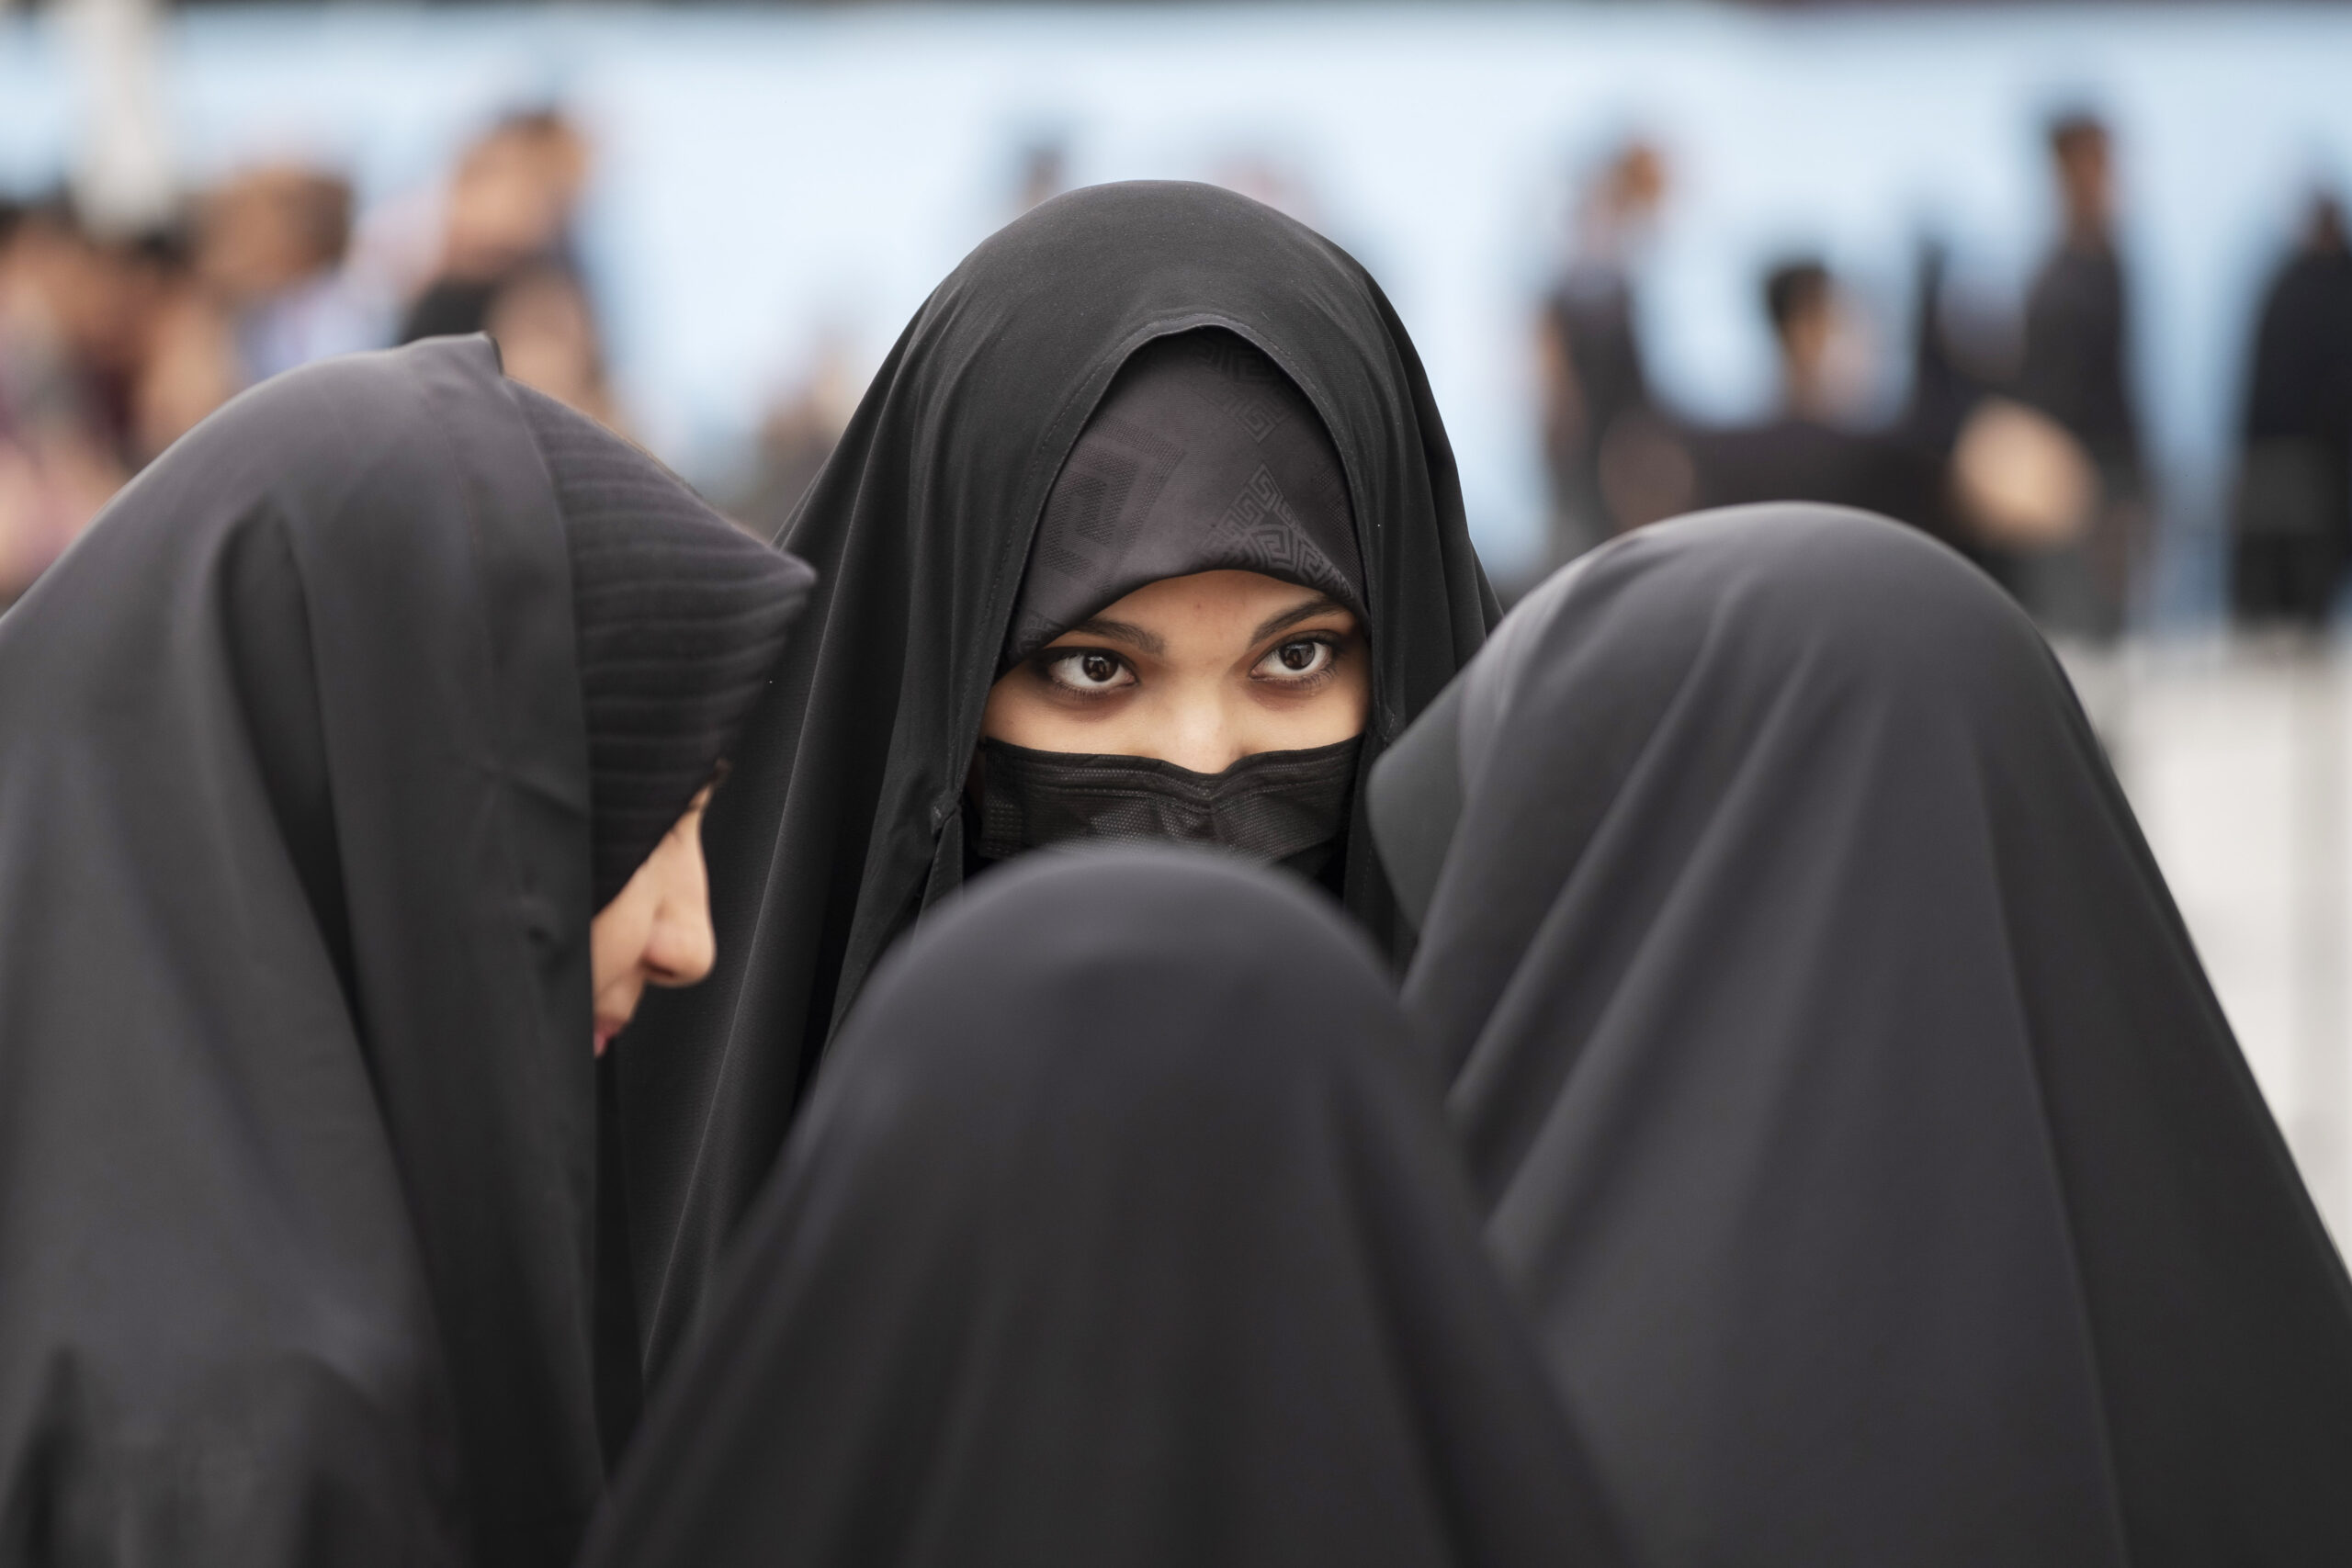 Iran New Hijab Rule: Should Women Wear Hijabs?